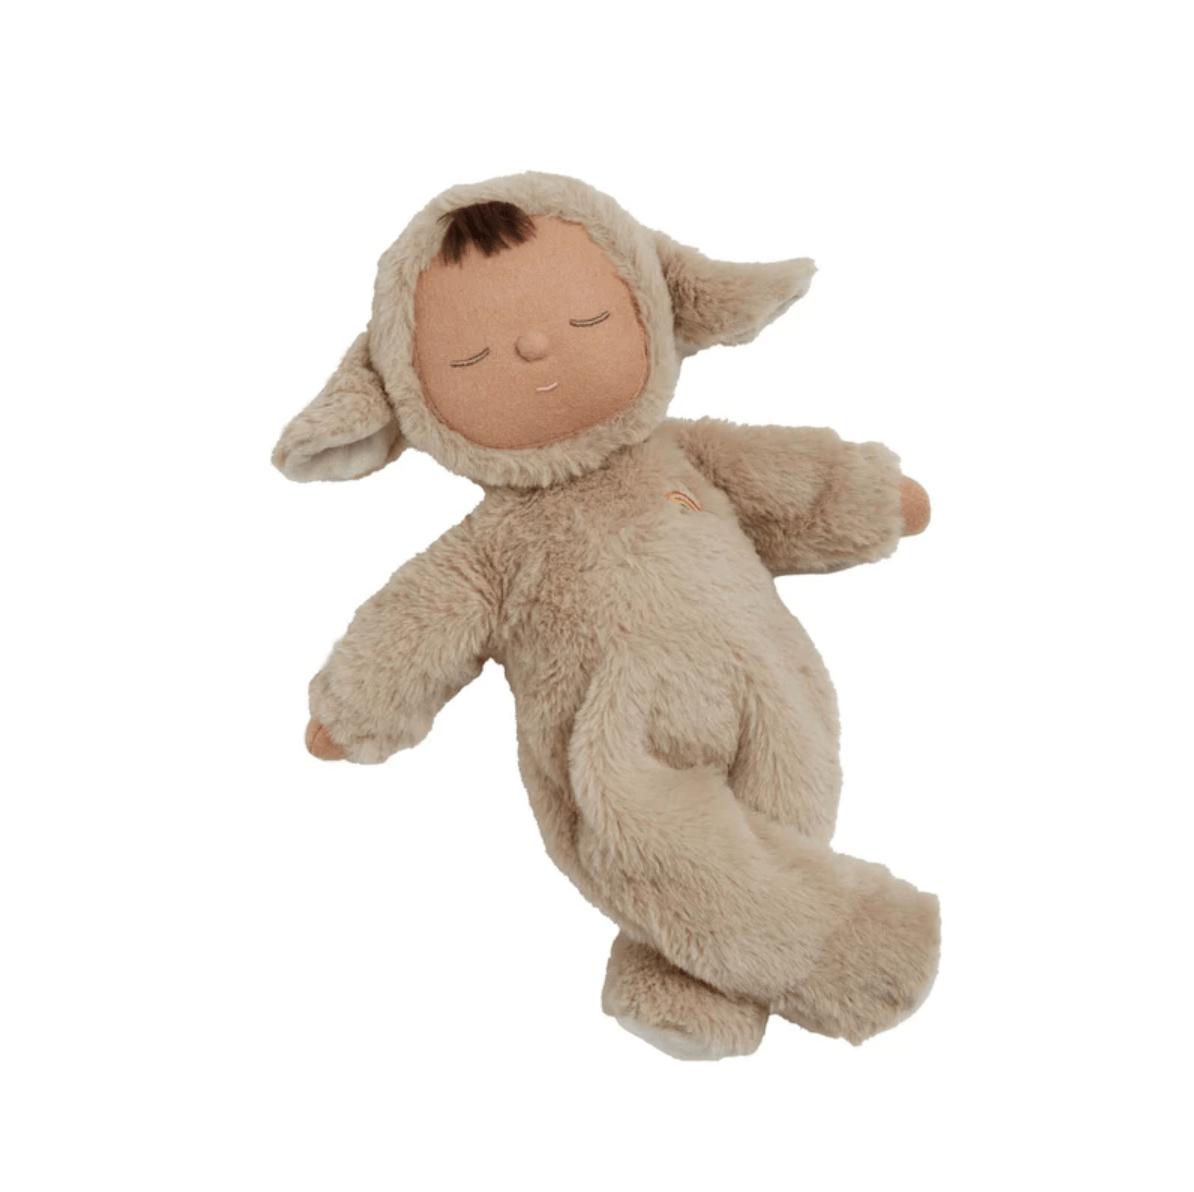 Olli Ella Rattan Cozy Dinkum Doll (Lamby Pip) by Olli Ella Wamble Walker: Handmade Rattan Toy for Toddlers | Sustainable Kids' Decor